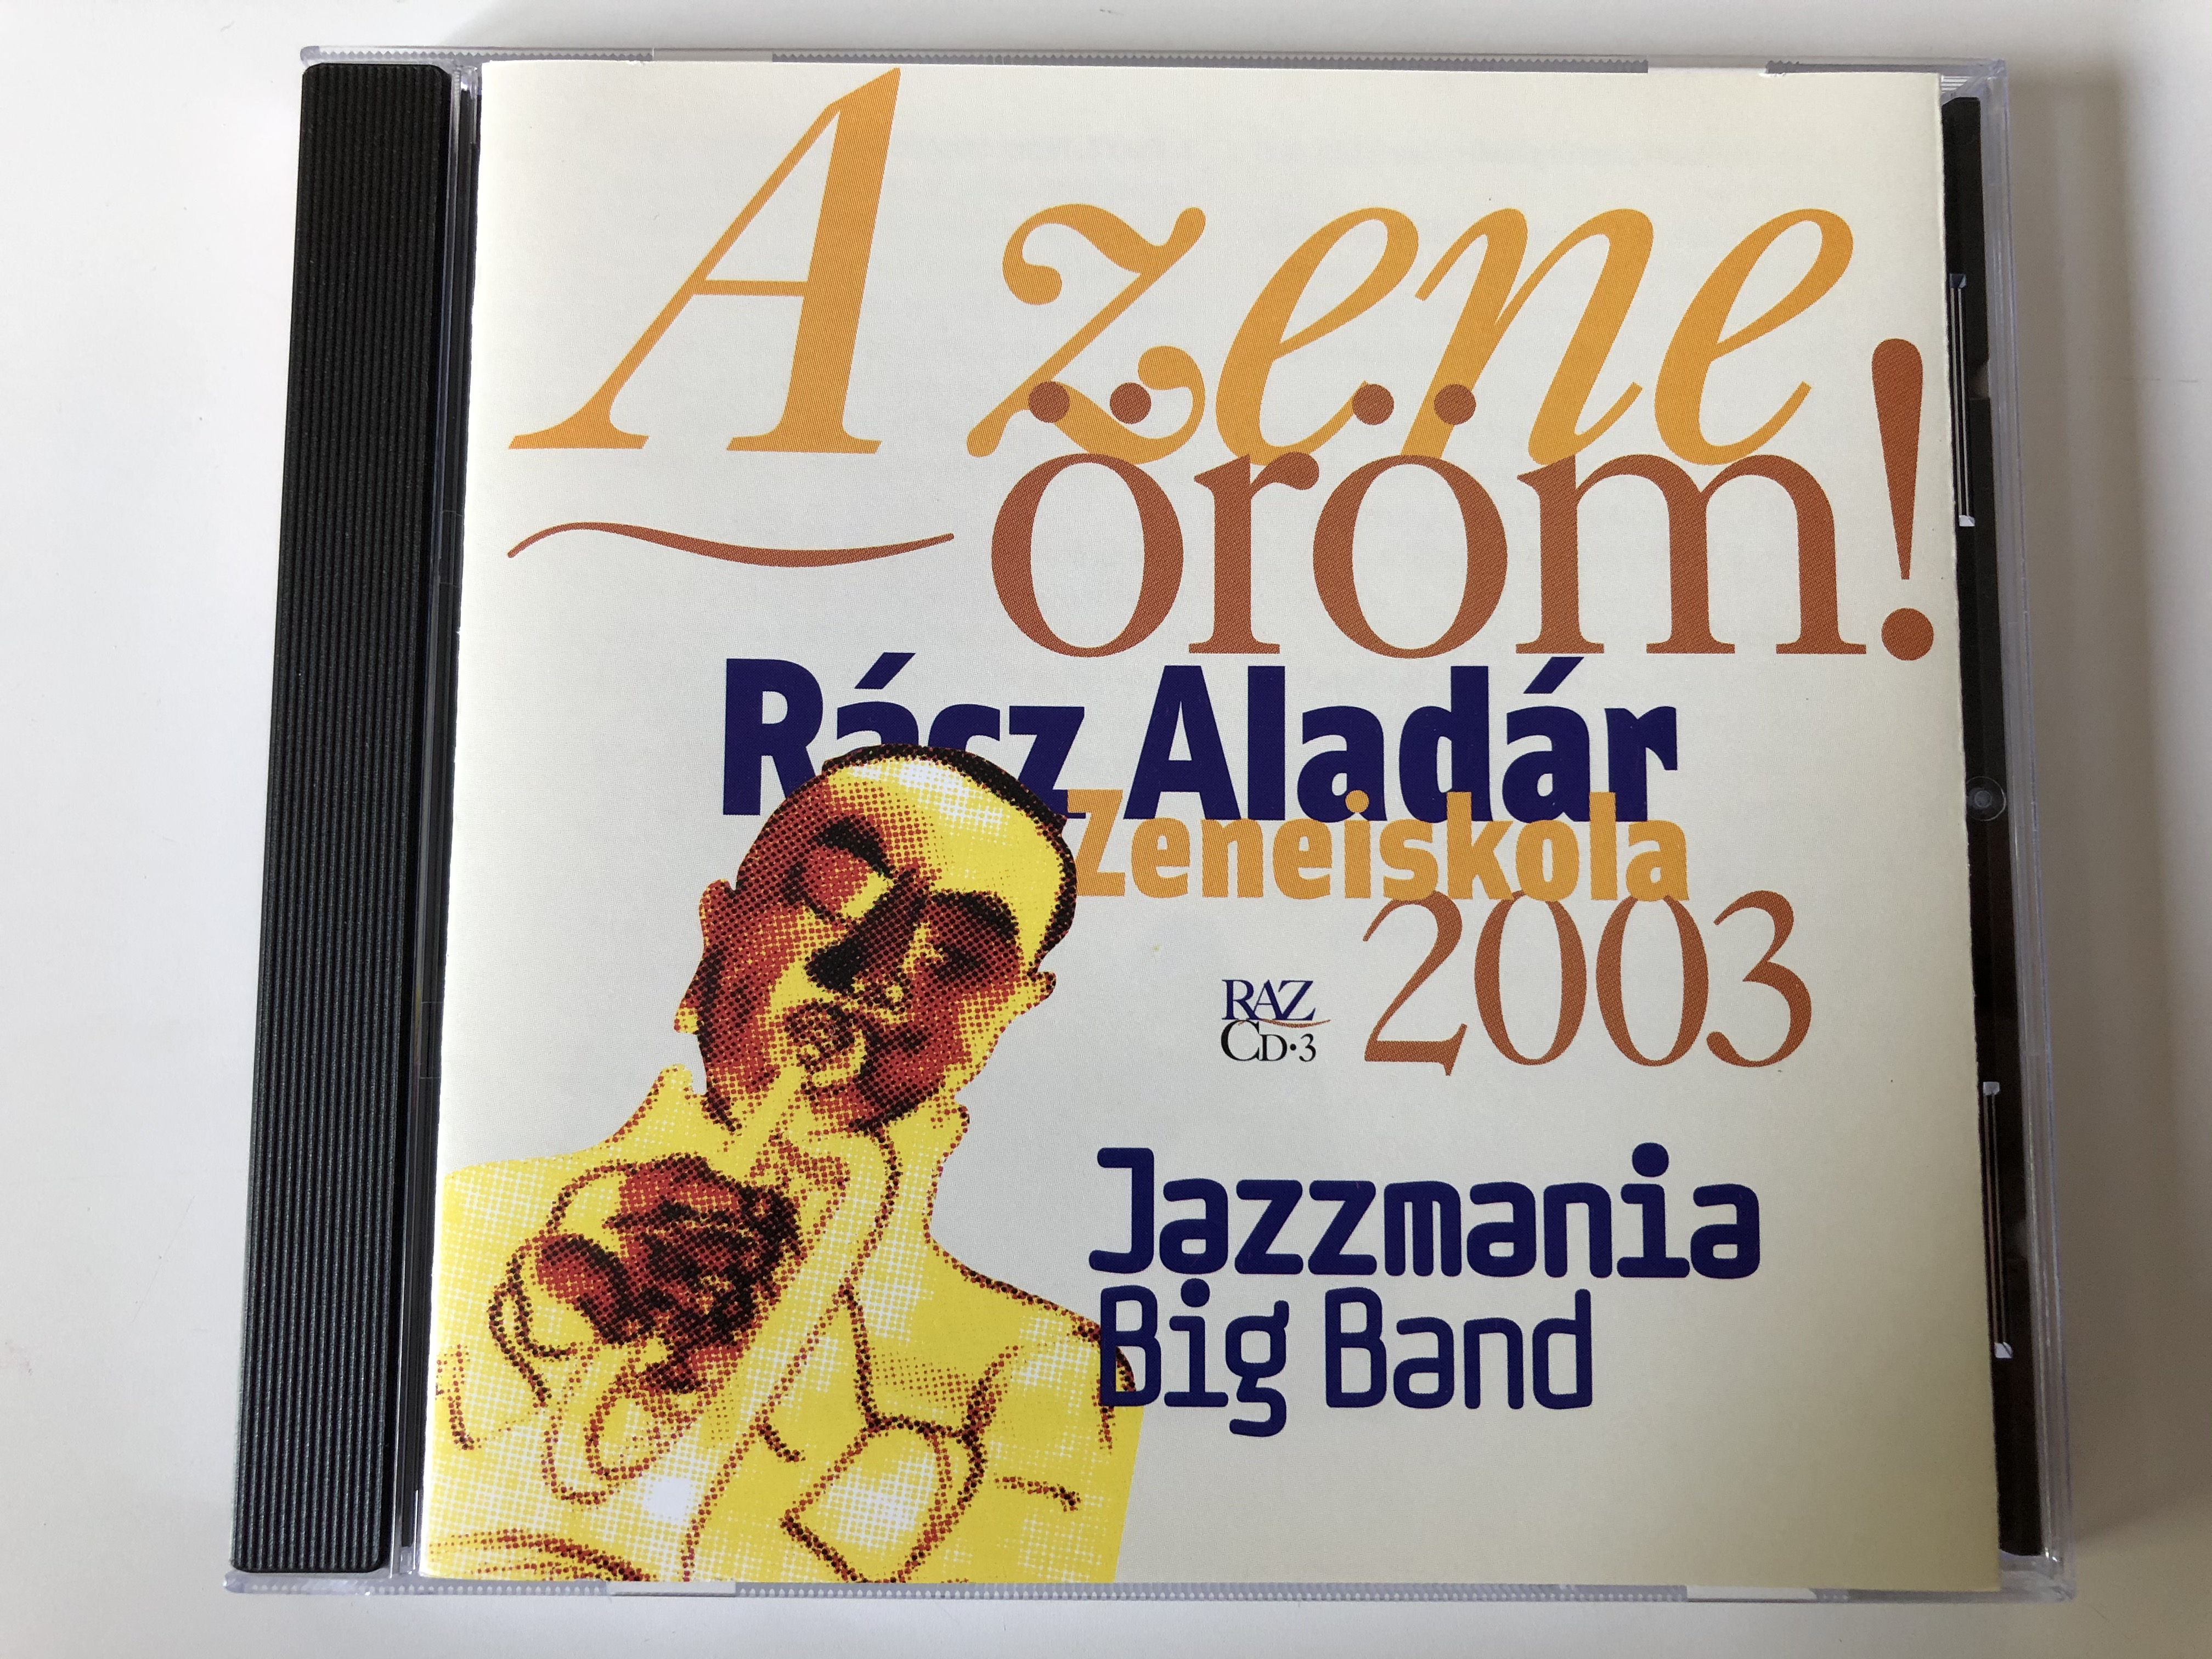 a-zene-orom-3.-rasz-aladar-zeneiskola-2003-jazzmania-big-band-mc-cd-produkcio-audio-cd-2003-hcd-187-cd3-1-.jpg